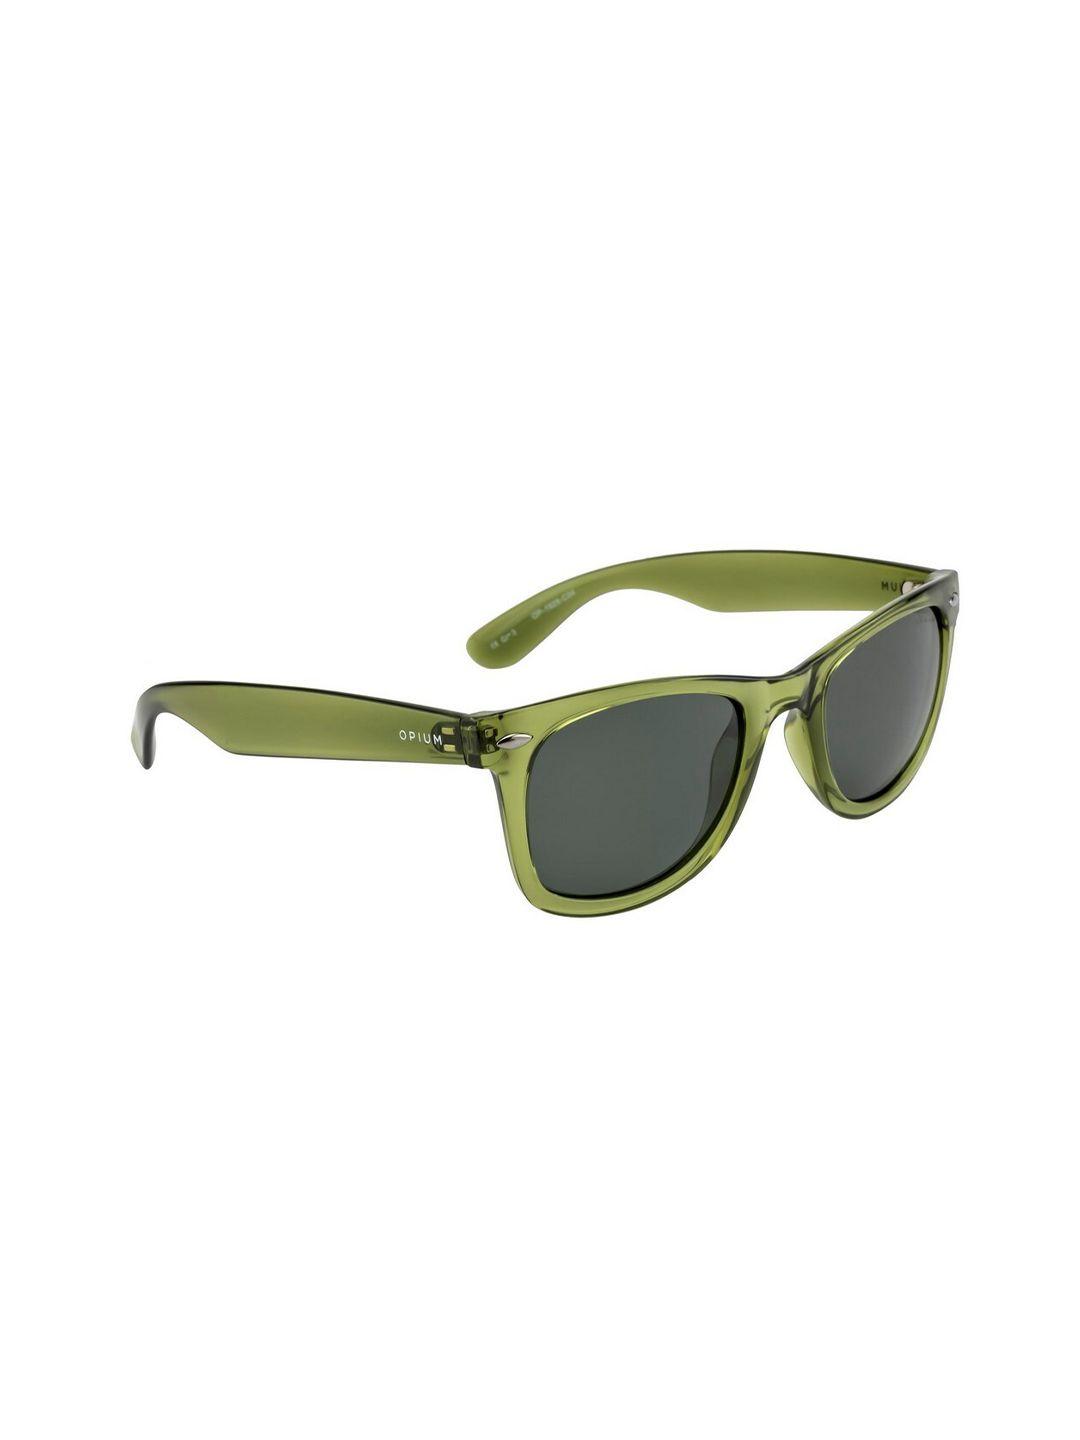 opium men green lens & green wayfarer sunglasses with uv protected lens op-1928-c04